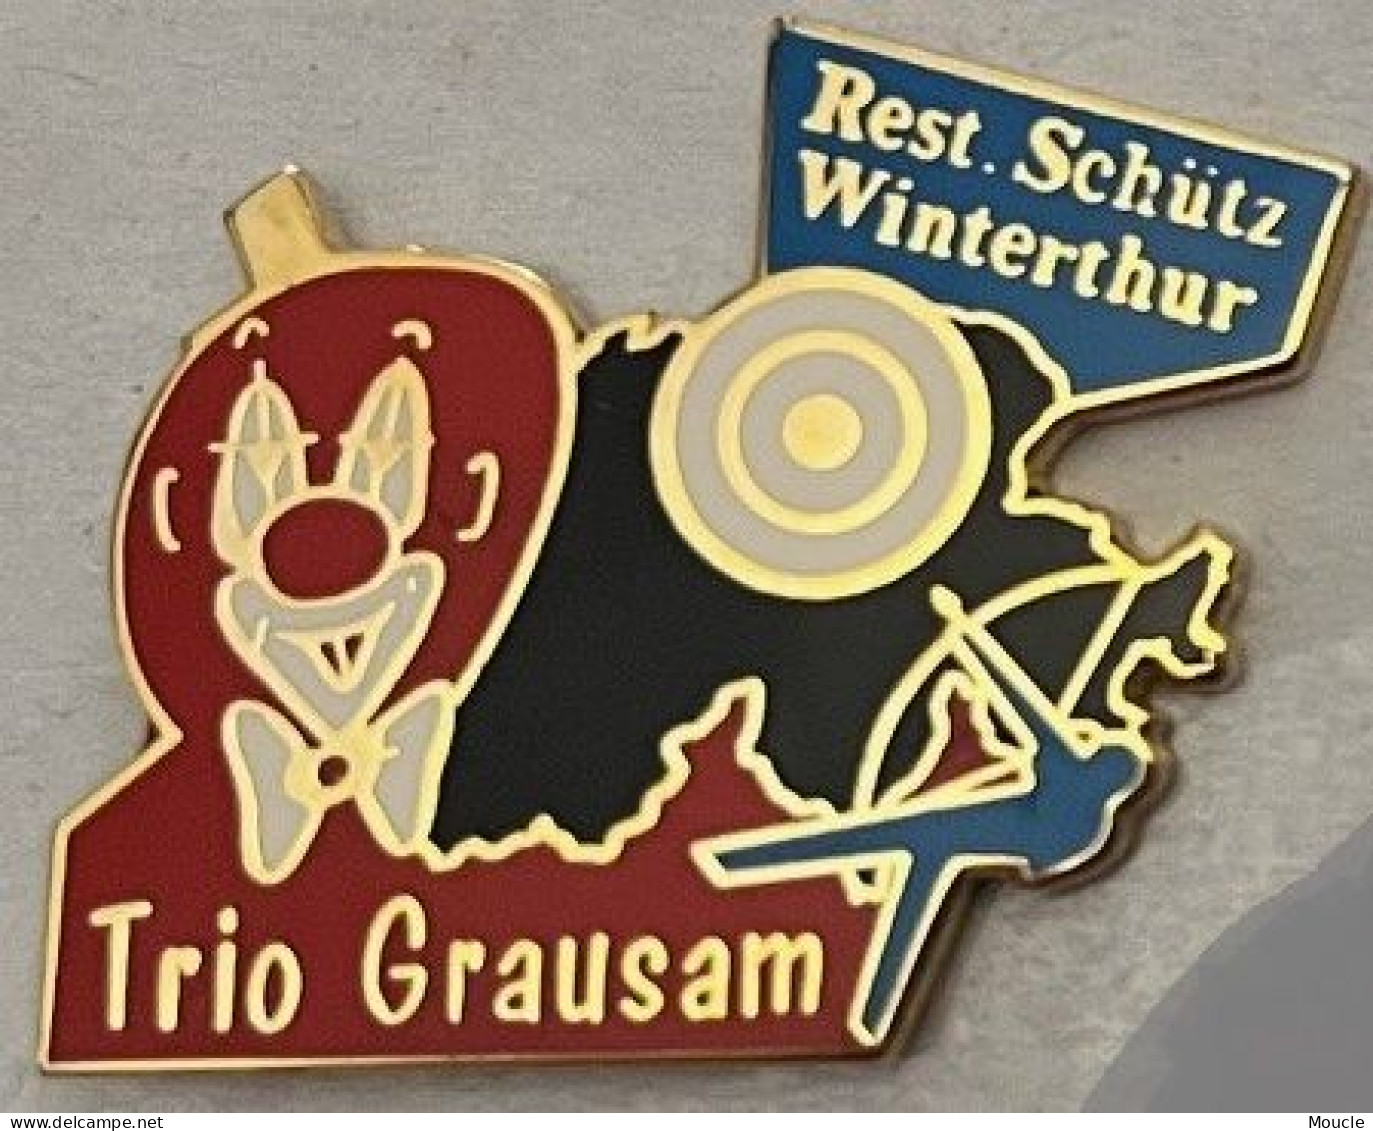 TIR A L'ARC CLUB -  TRIO GRAUSAM - CLOWN - REST. SCHÜTZ - WINTERHUR - SUISSE - SCHWEIZ - FLECHE - CIBLE -  ARCHER - (34) - Tiro Al Arco